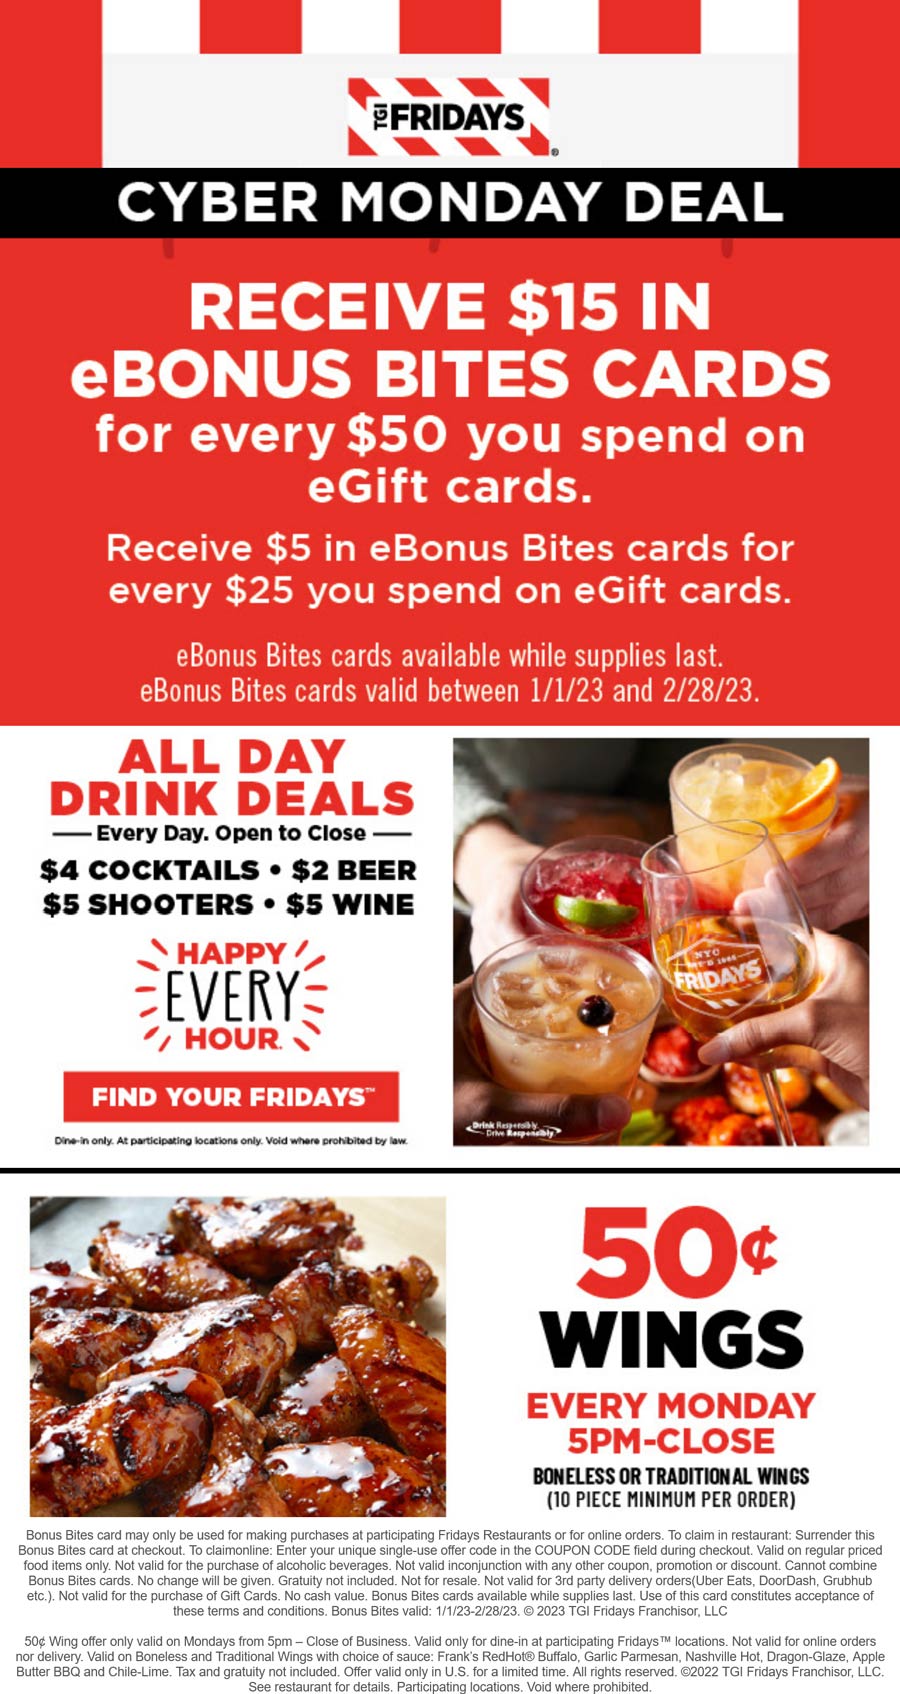 TGI Fridays restaurants Coupon  .50 cent wings today also $15 card free on every $50 ecard at TGI Fridays restaurants #tgifridays 